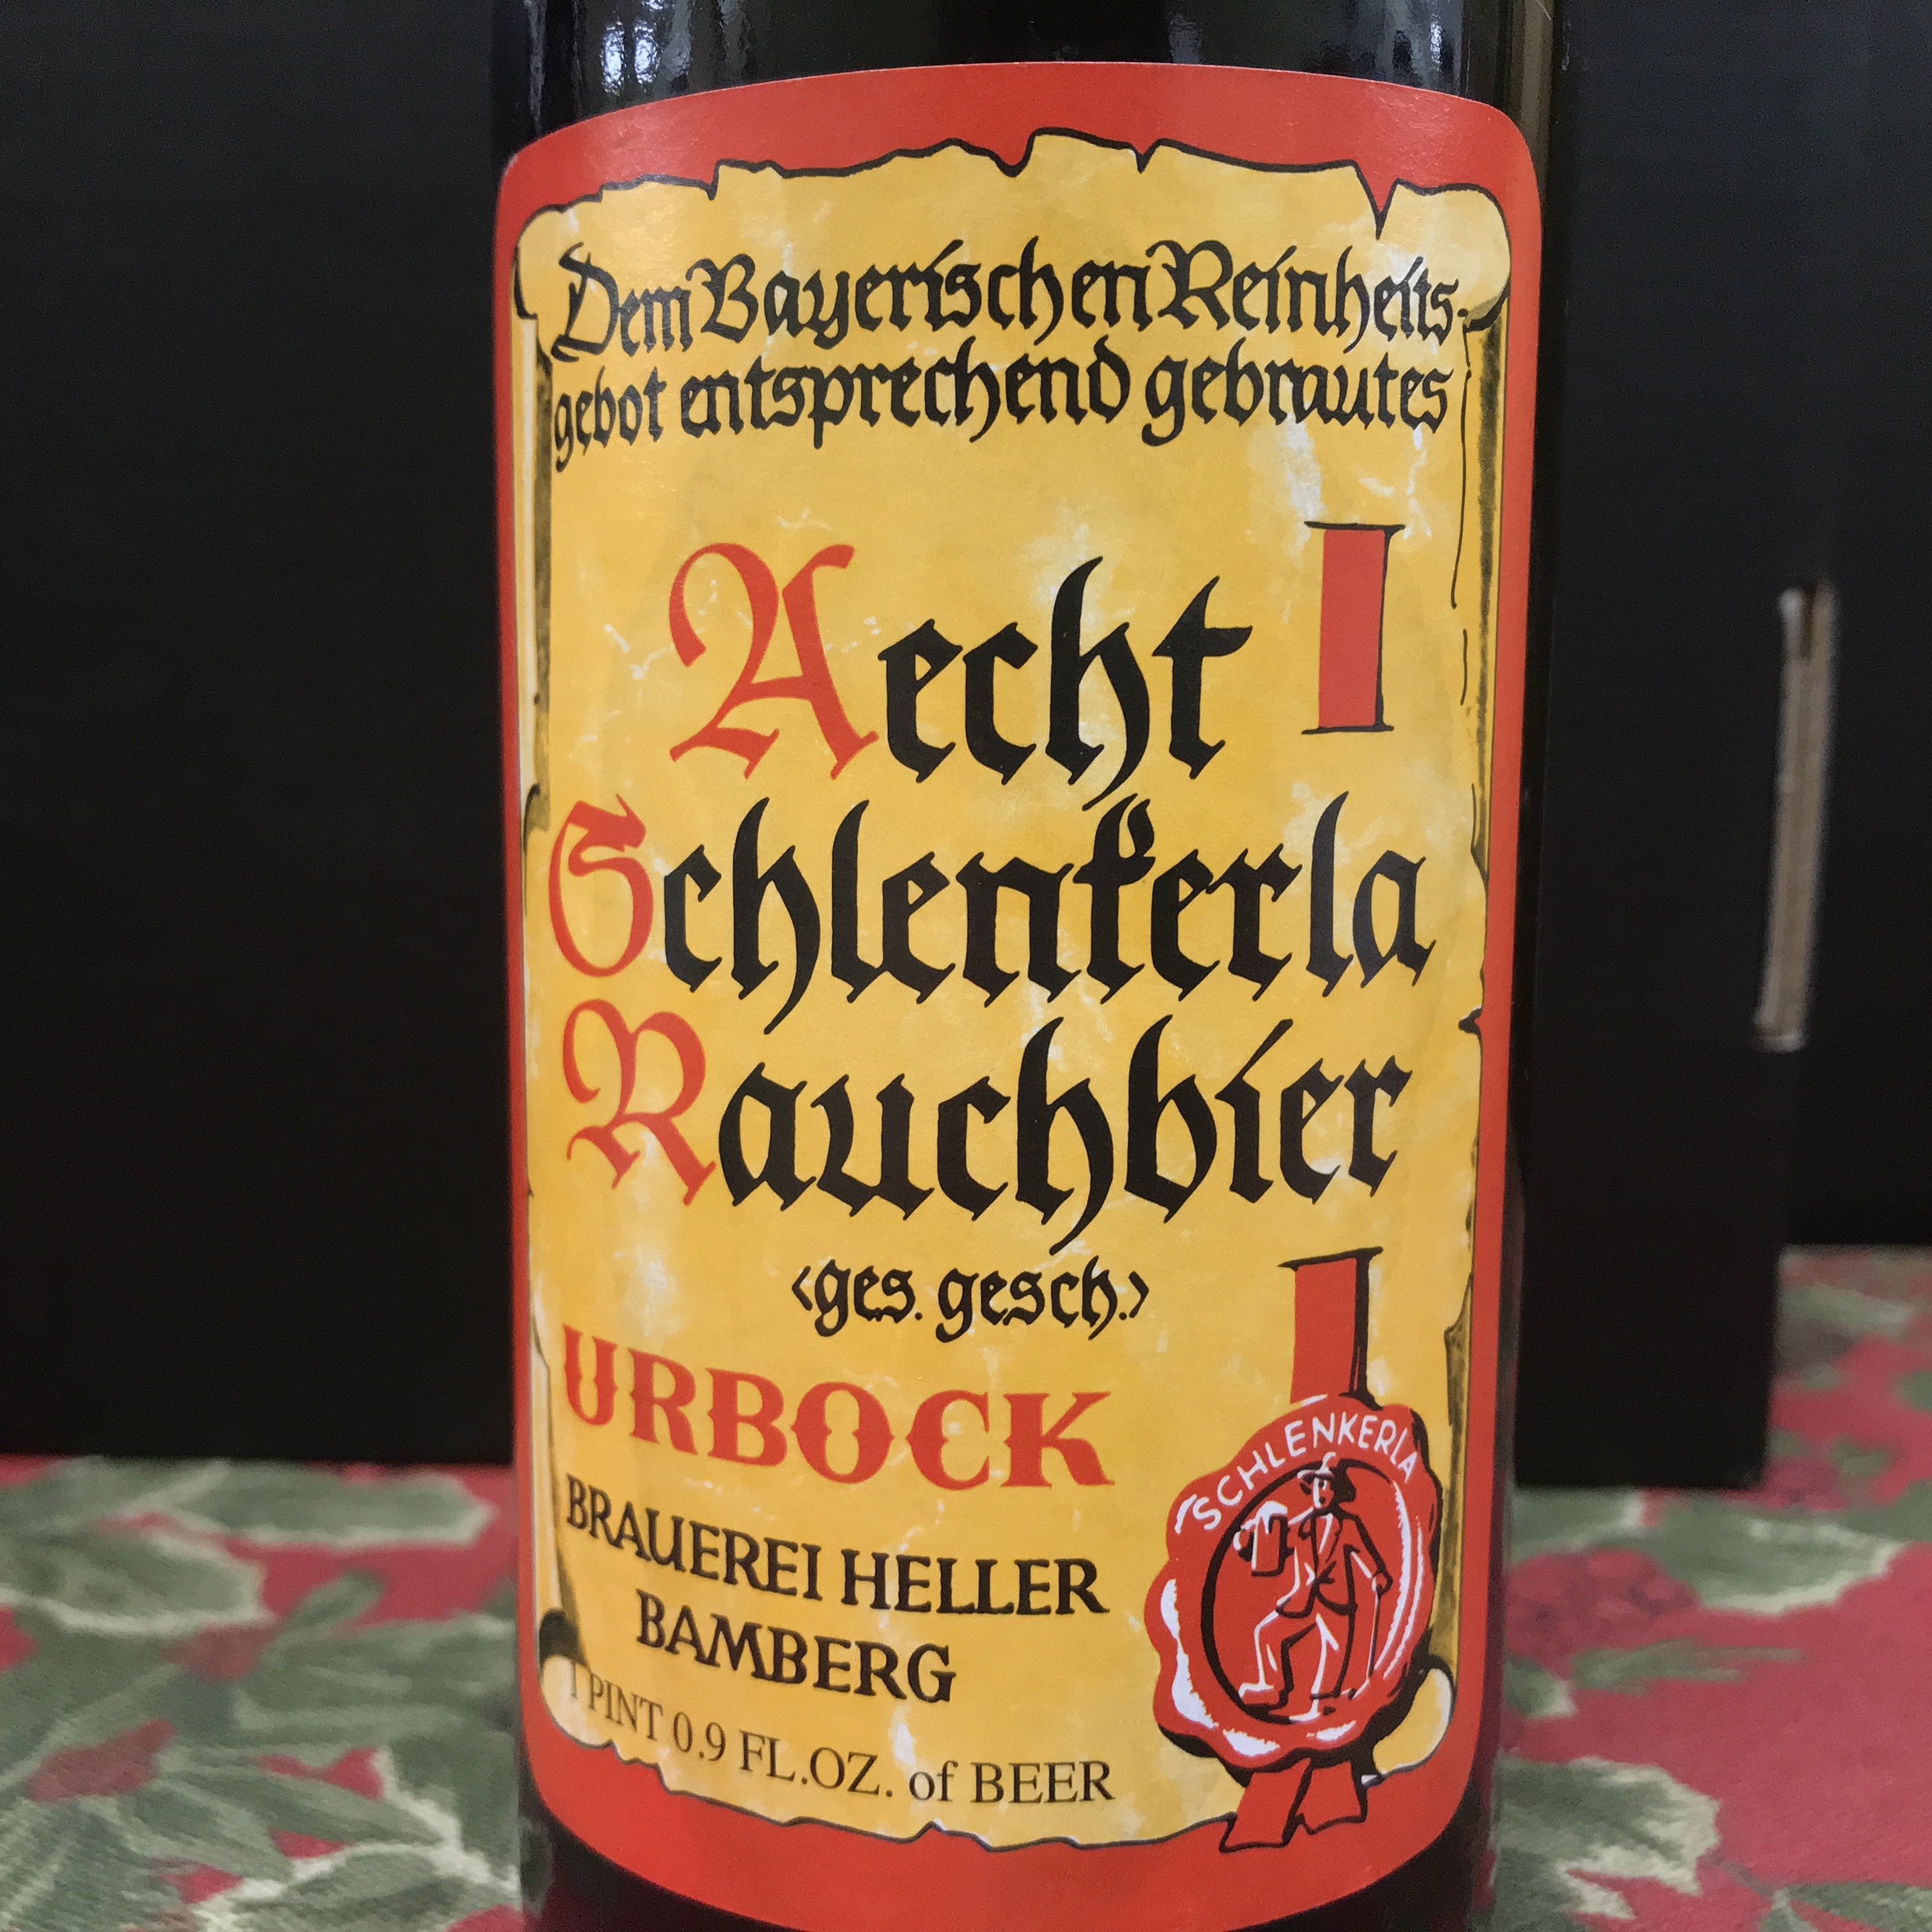 Brauerei Heller Urbock single 1 pint